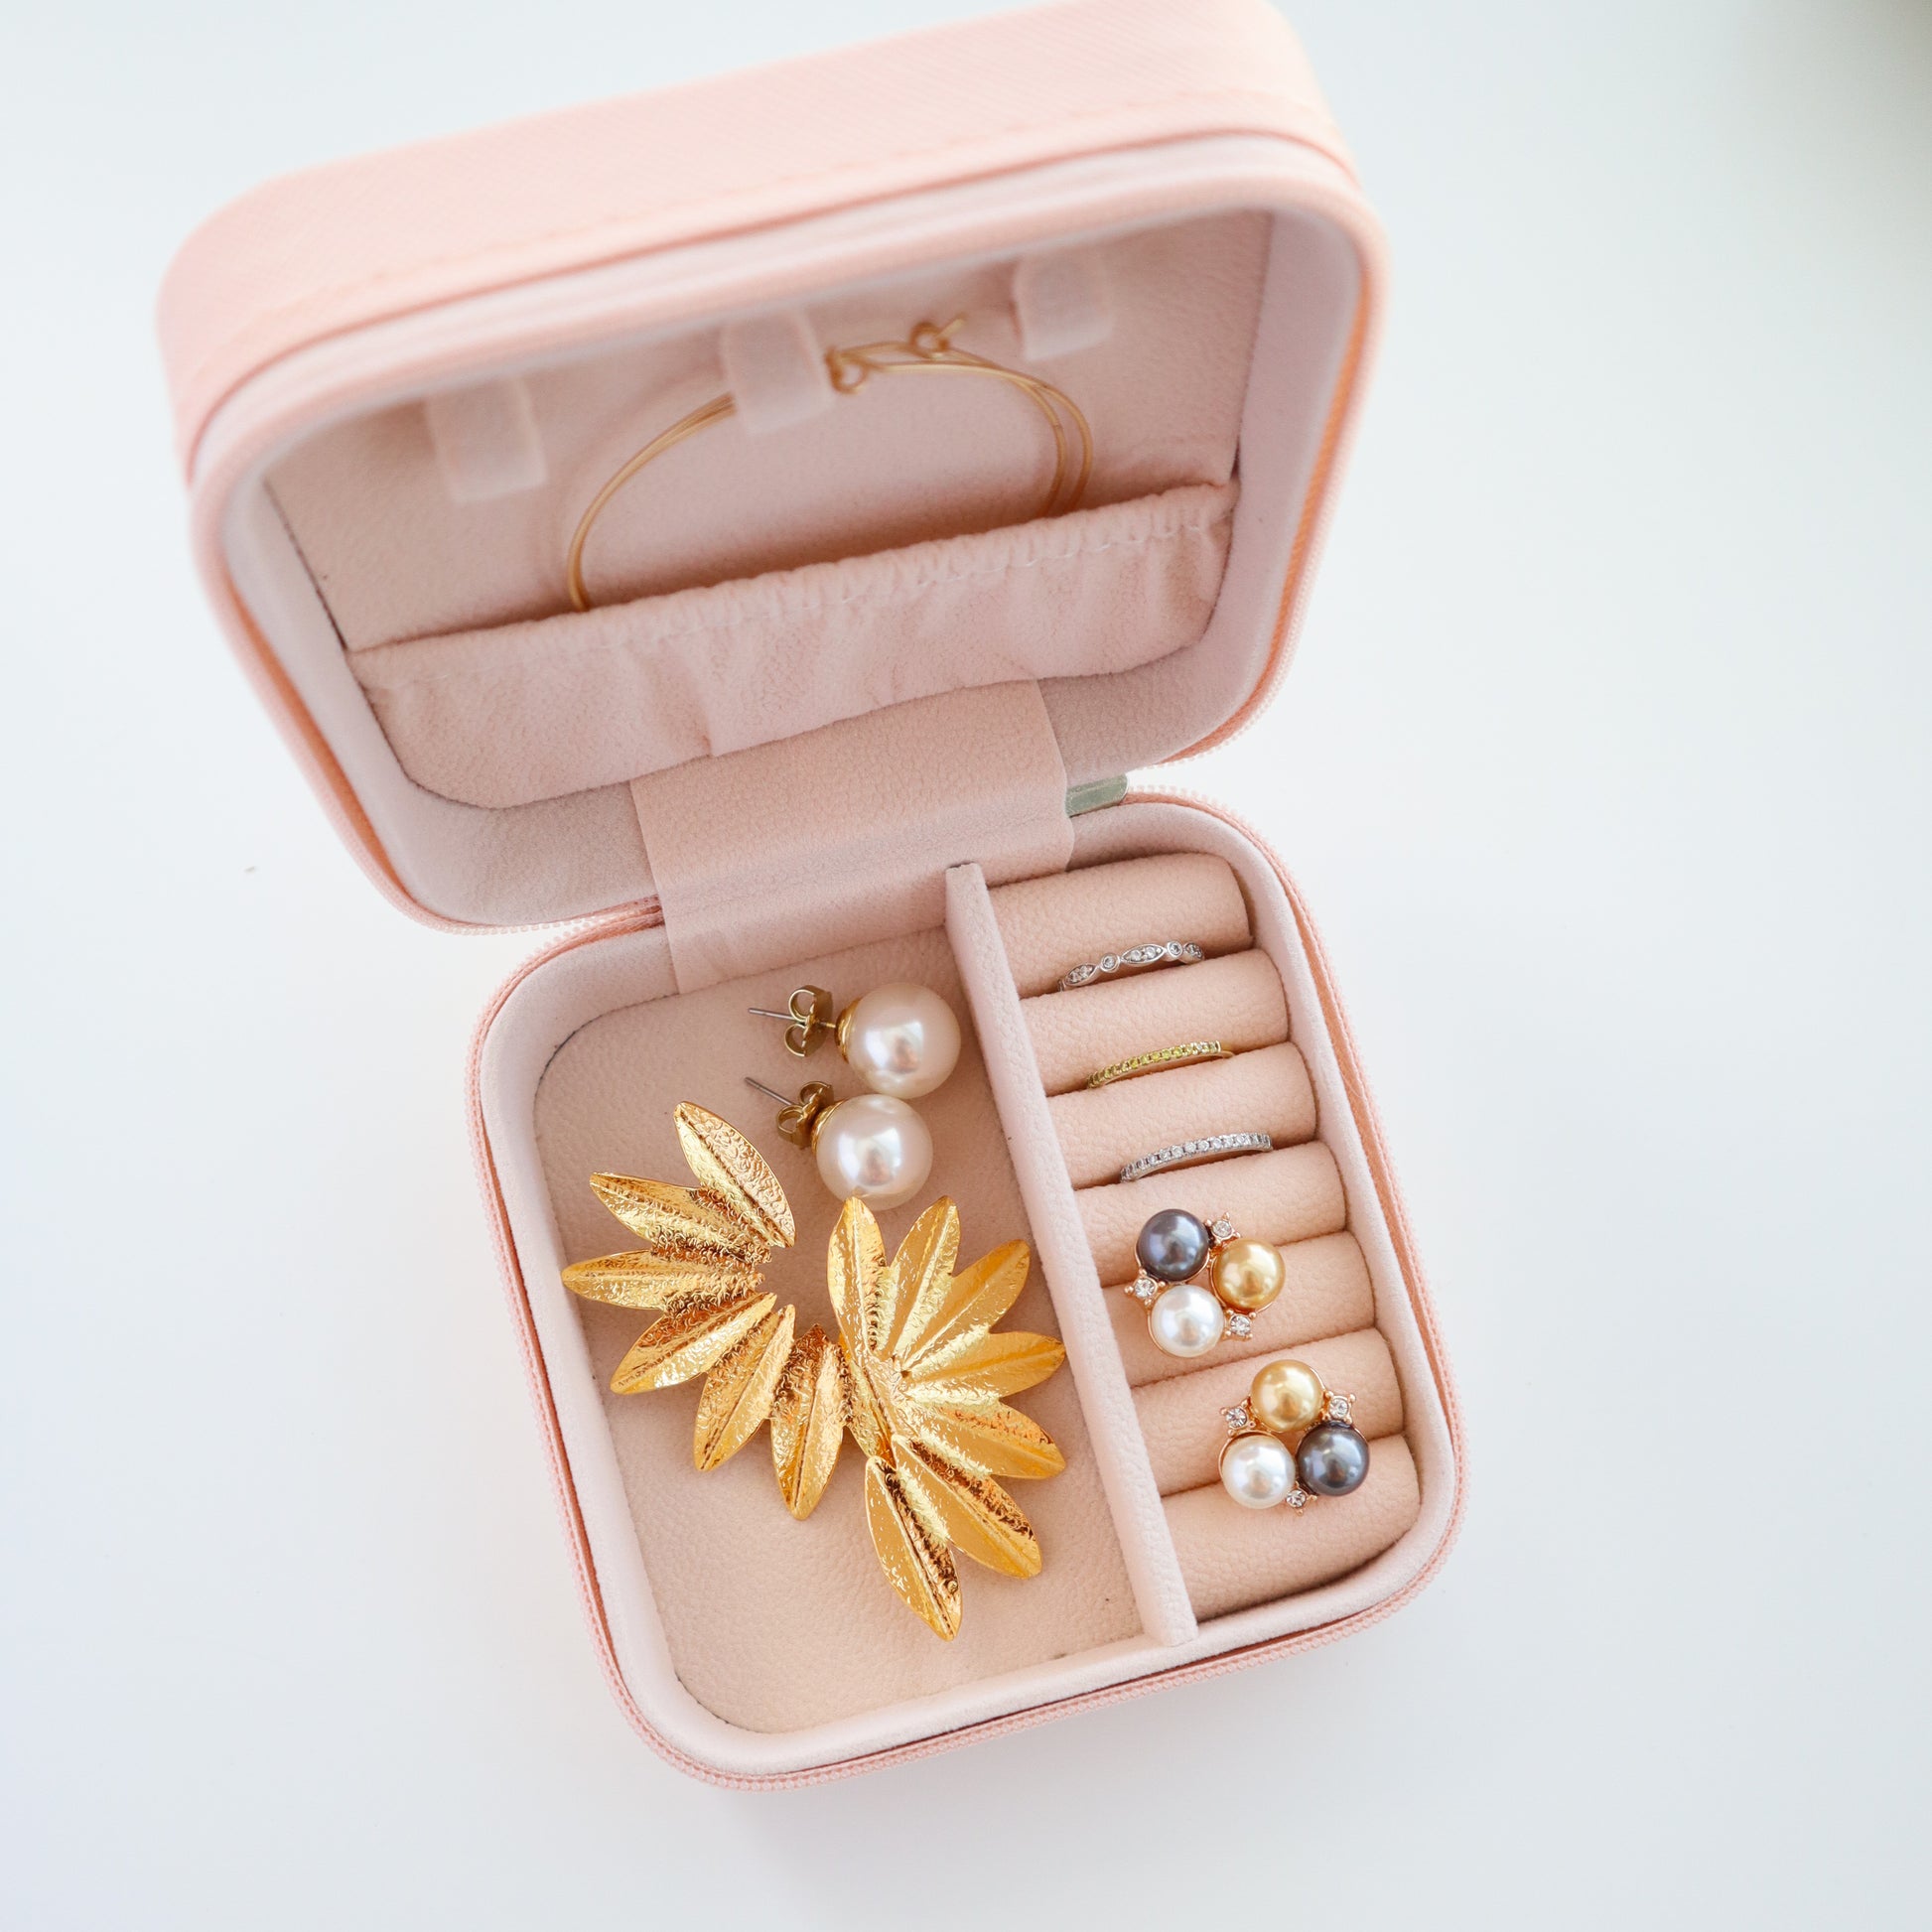 Medium Travel Jewelry Case in Rose Gold